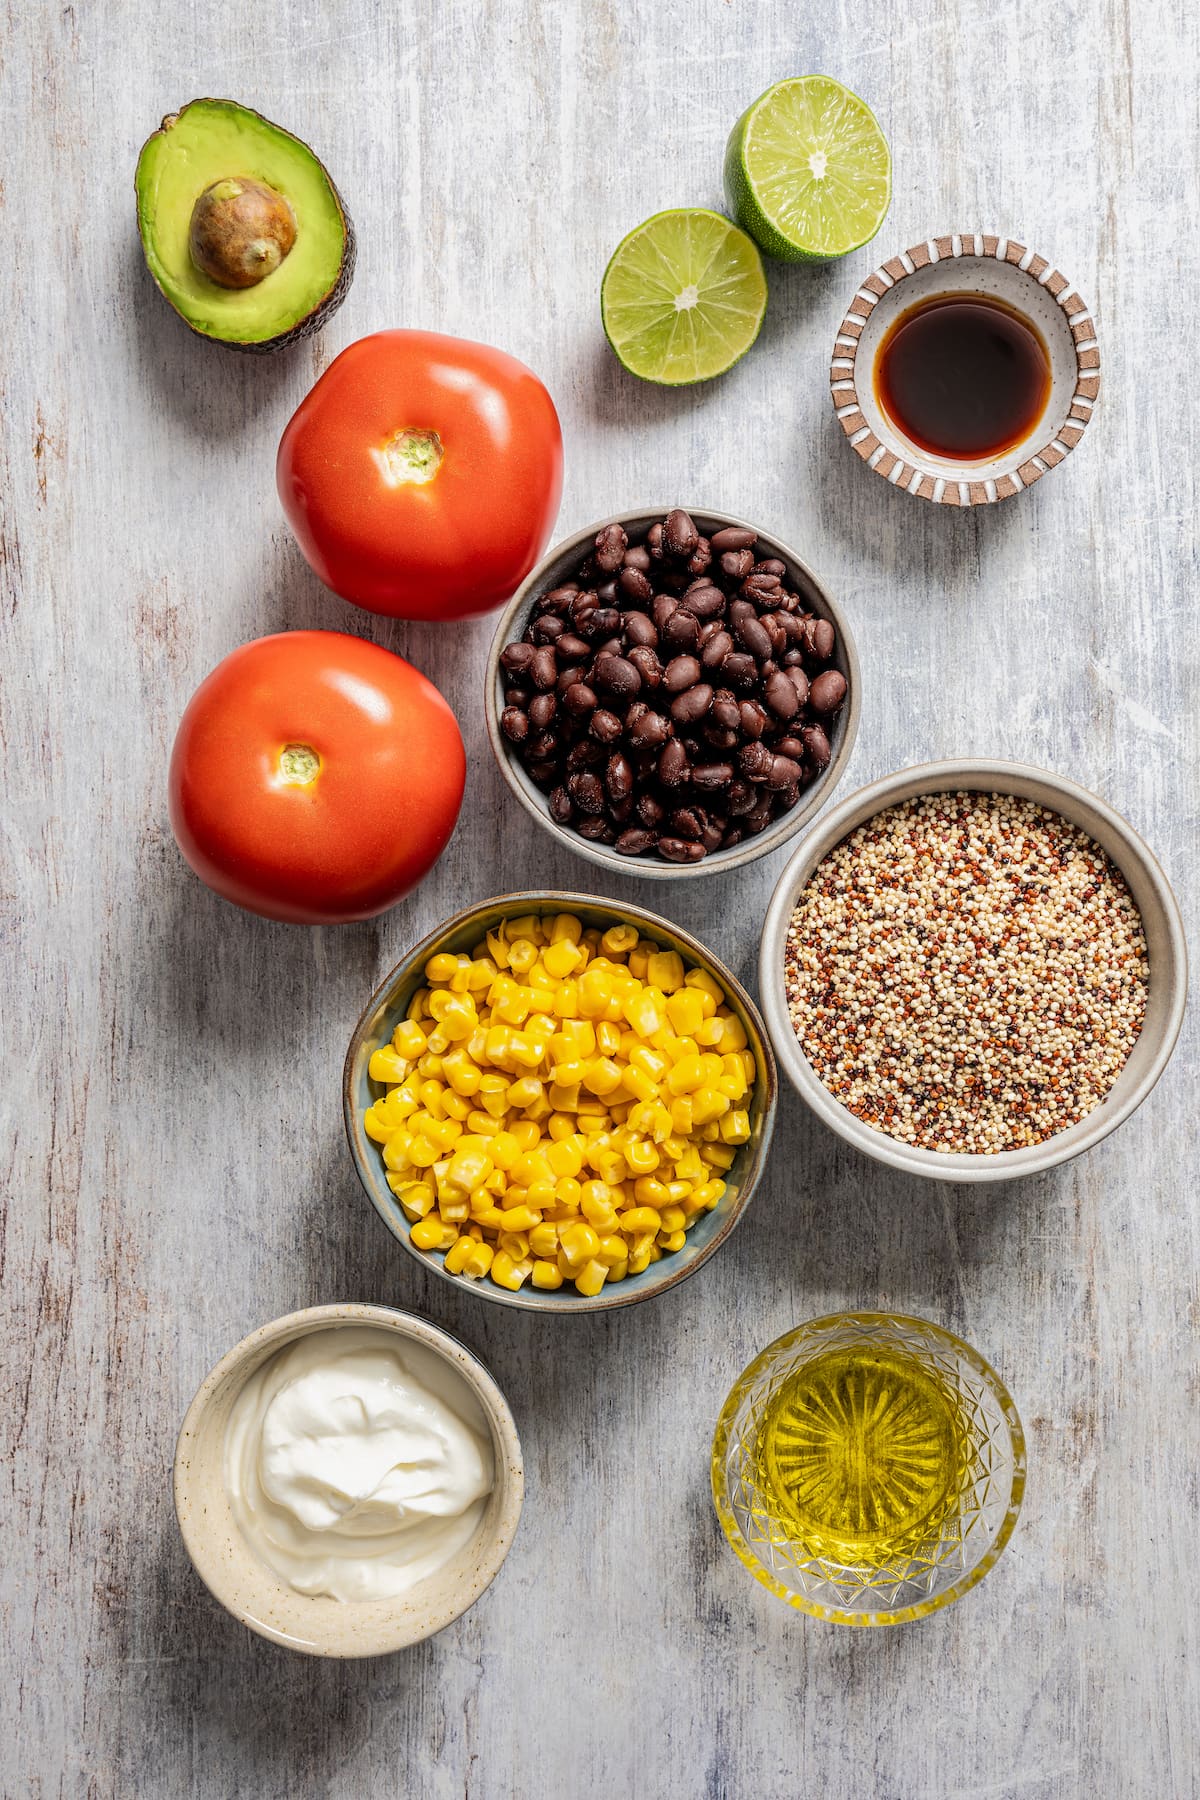 Ingredients for quinoa Southwestern salad.